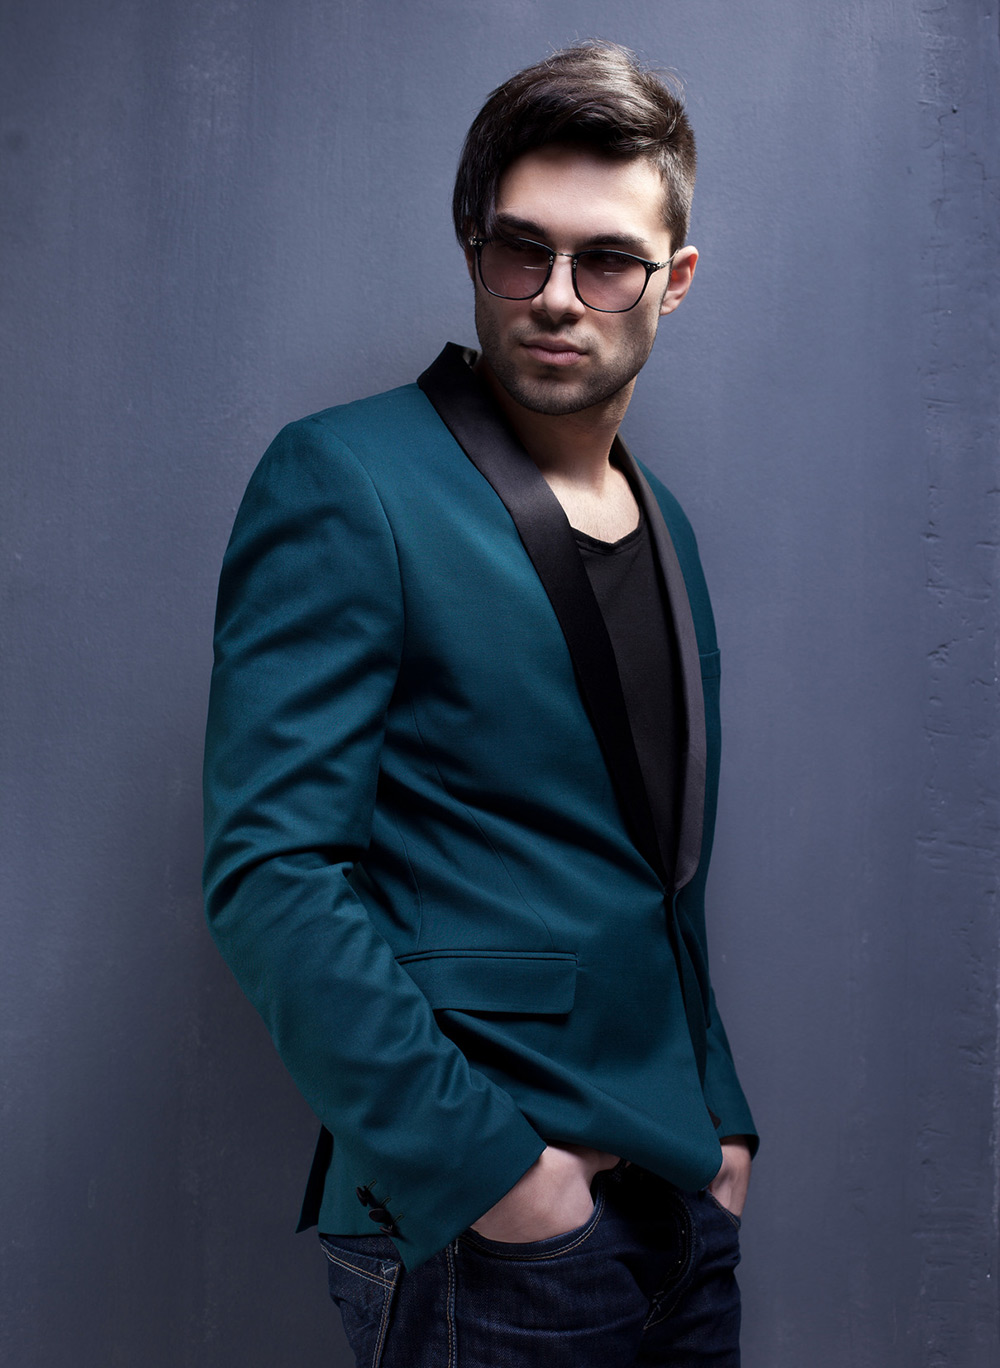 Cool Fashion Male Model Posing Street Stock Photo 407596957 | Shutterstock